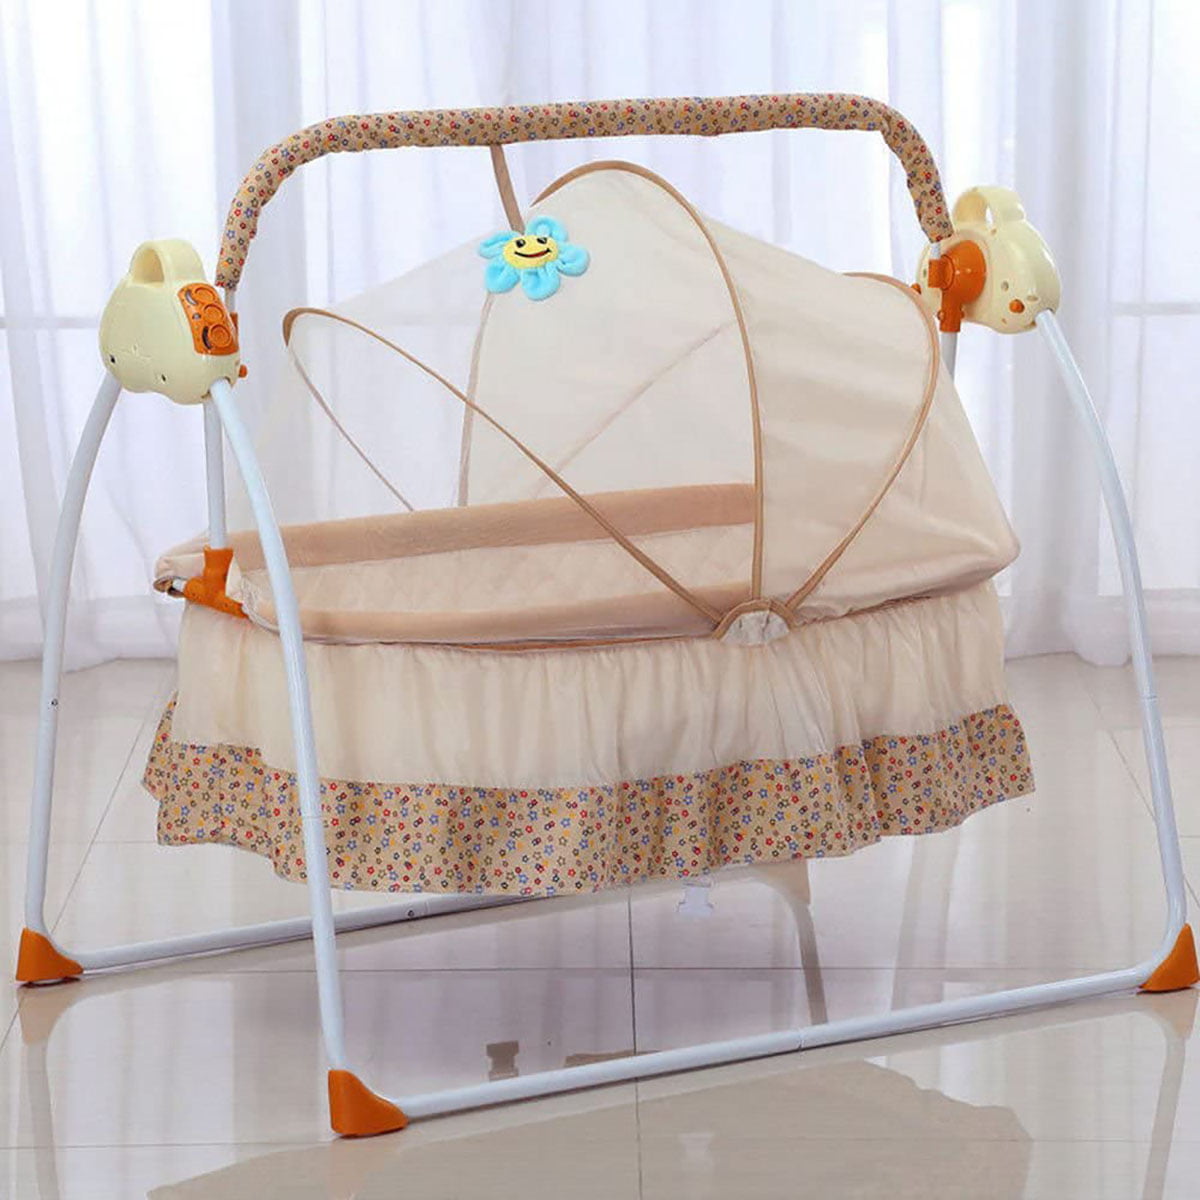 amarillo SANPLO Baby Swing Chair Electric Cradle Automatic Bassinet Baby Basket Bed Newborn Crib Rocking Music Sleeping